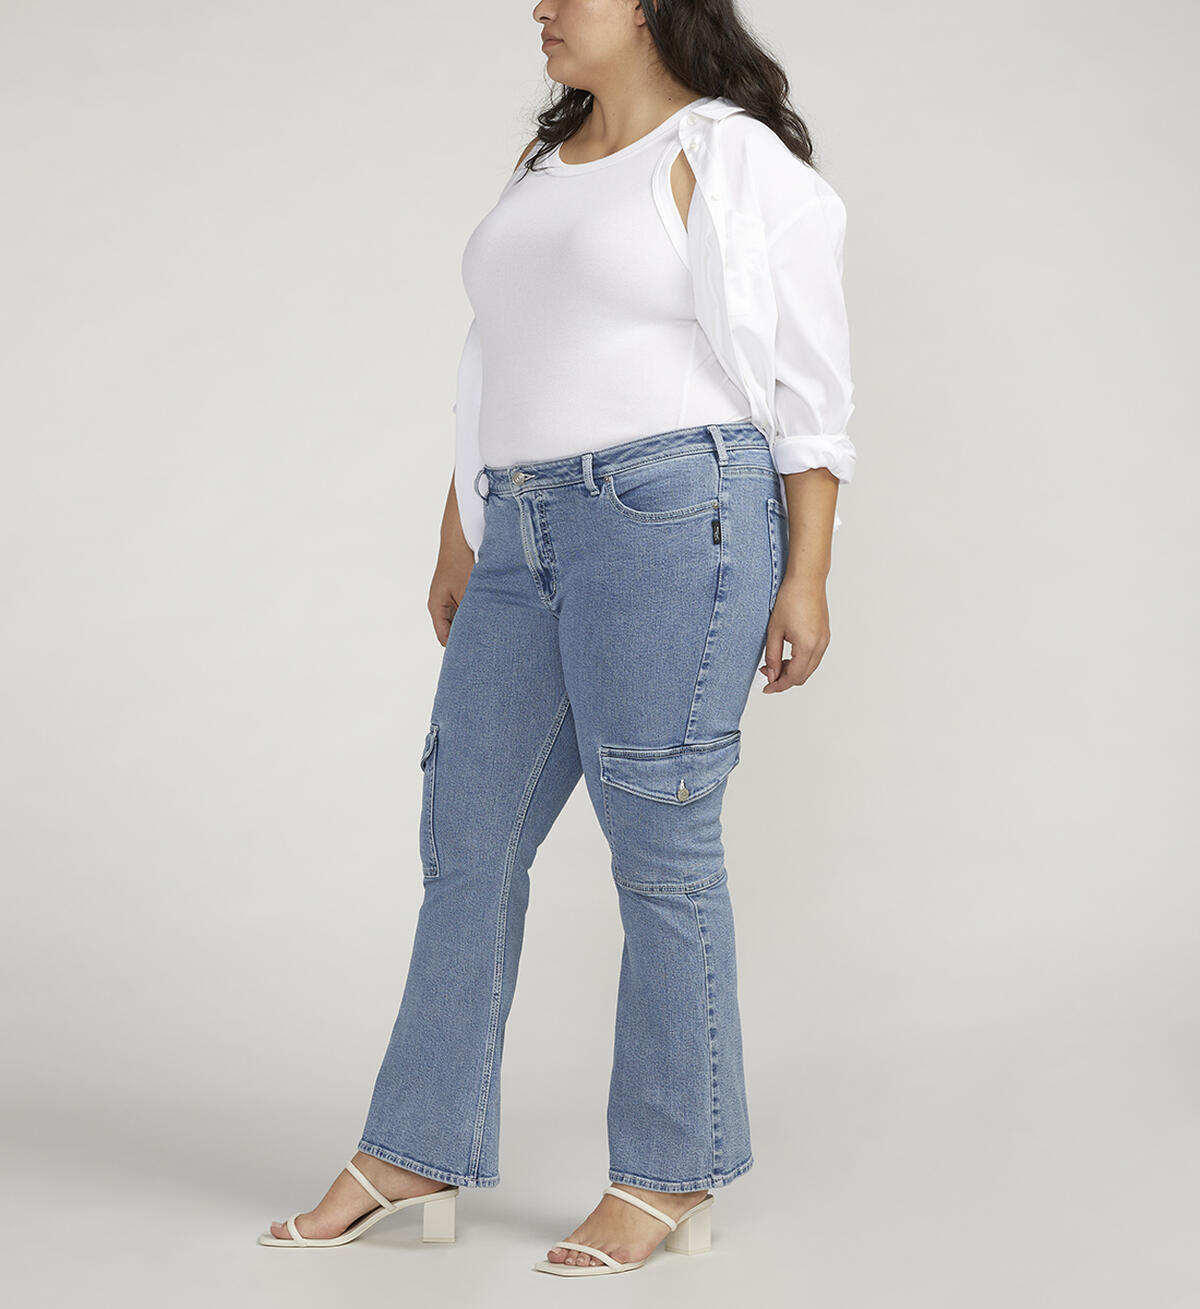 Be Low Cargo Pocket Jeans Plus Size, , hi-res image number 2